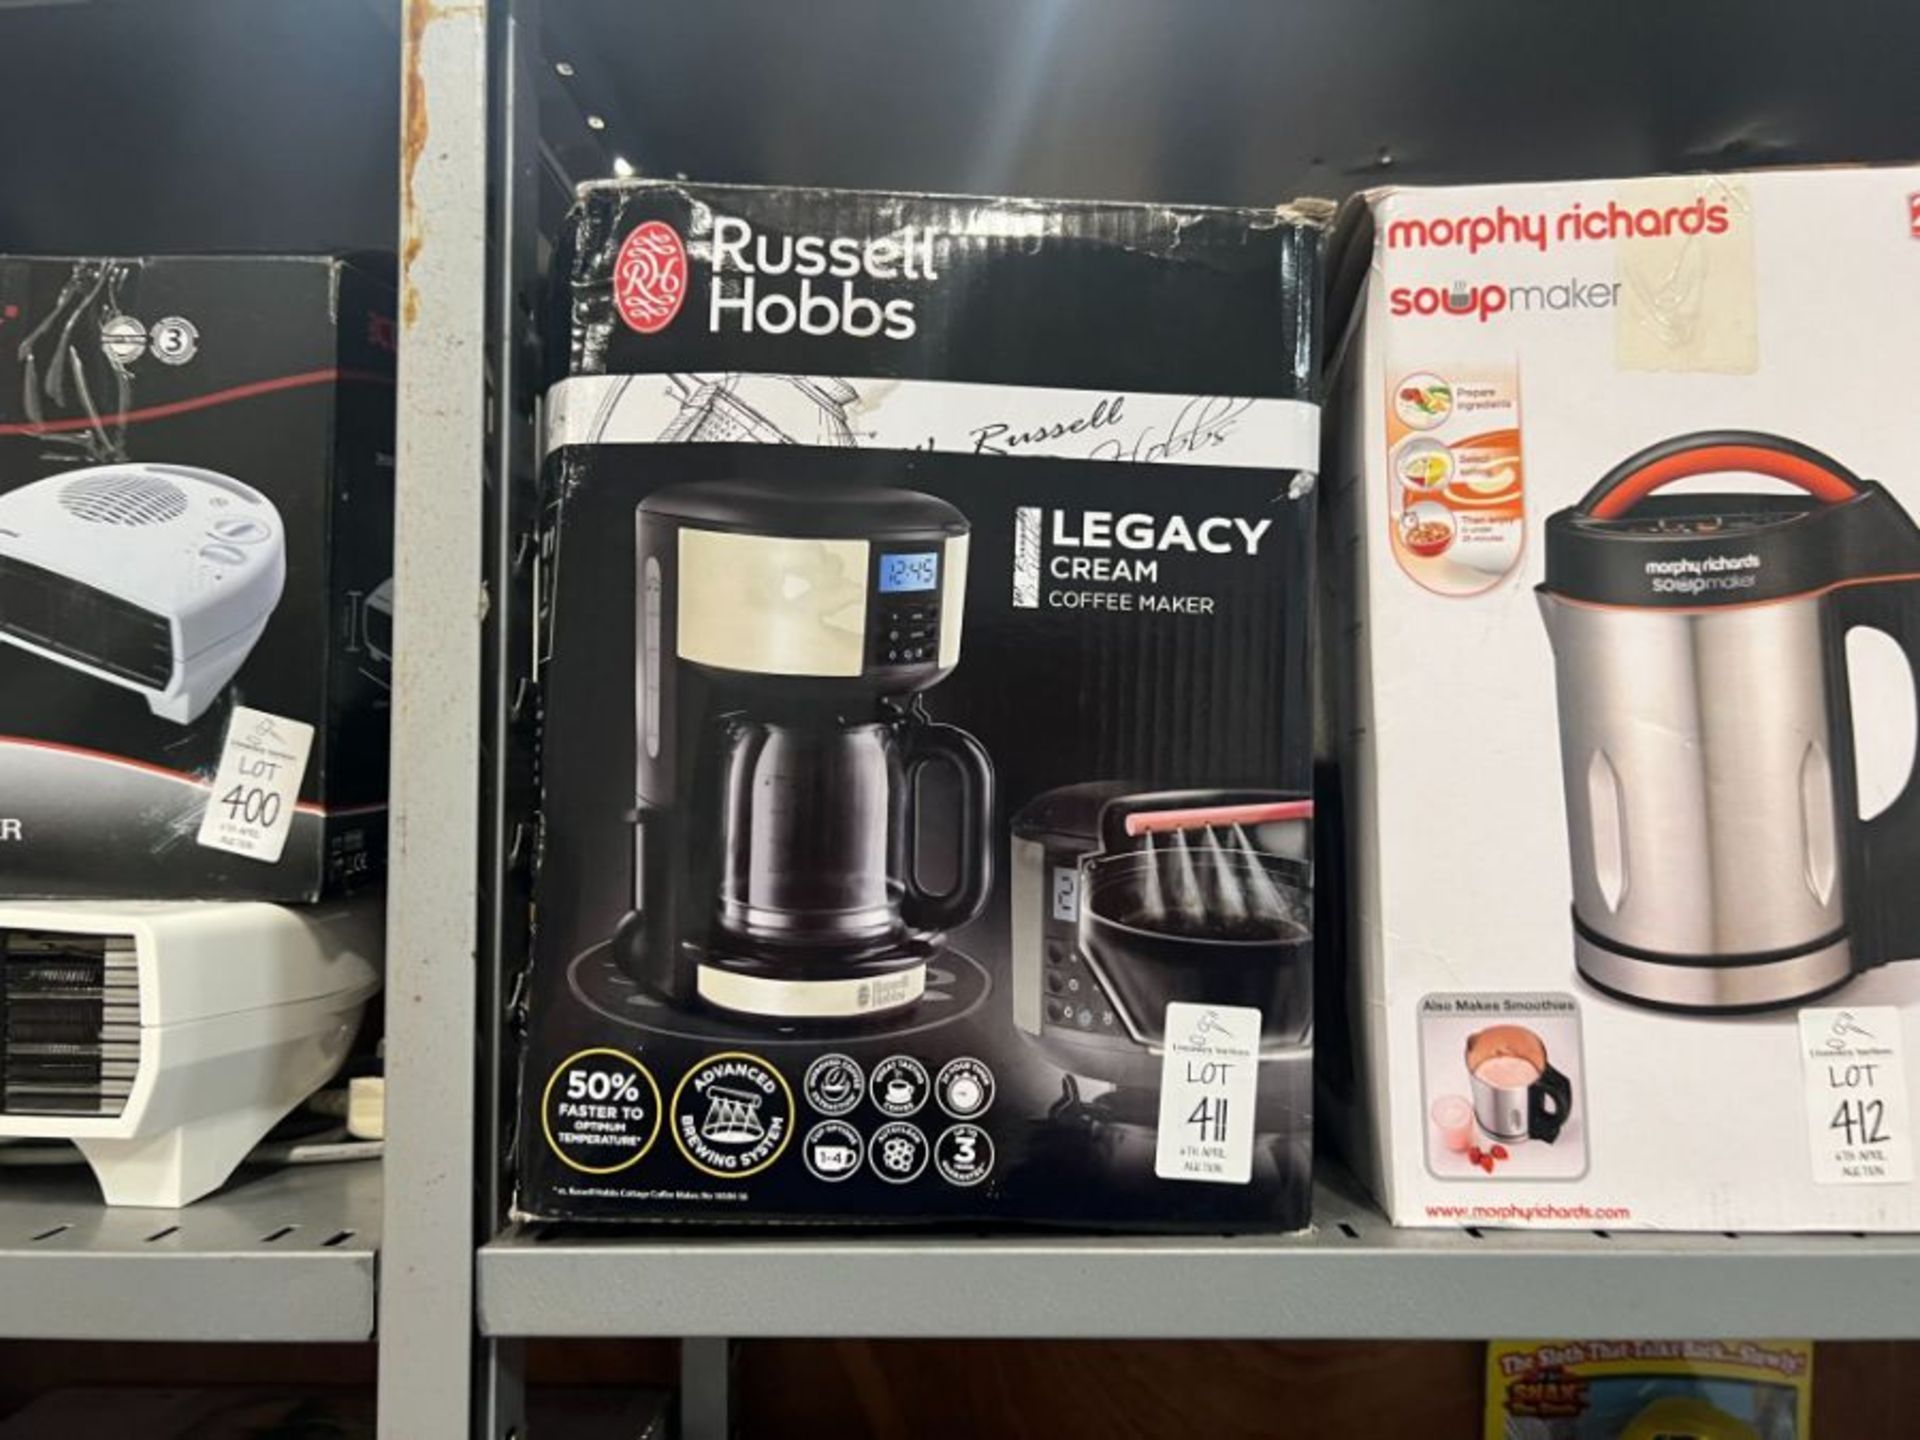 RUSSELL HOBBS LEGACY CREAM COFFEE MAKER